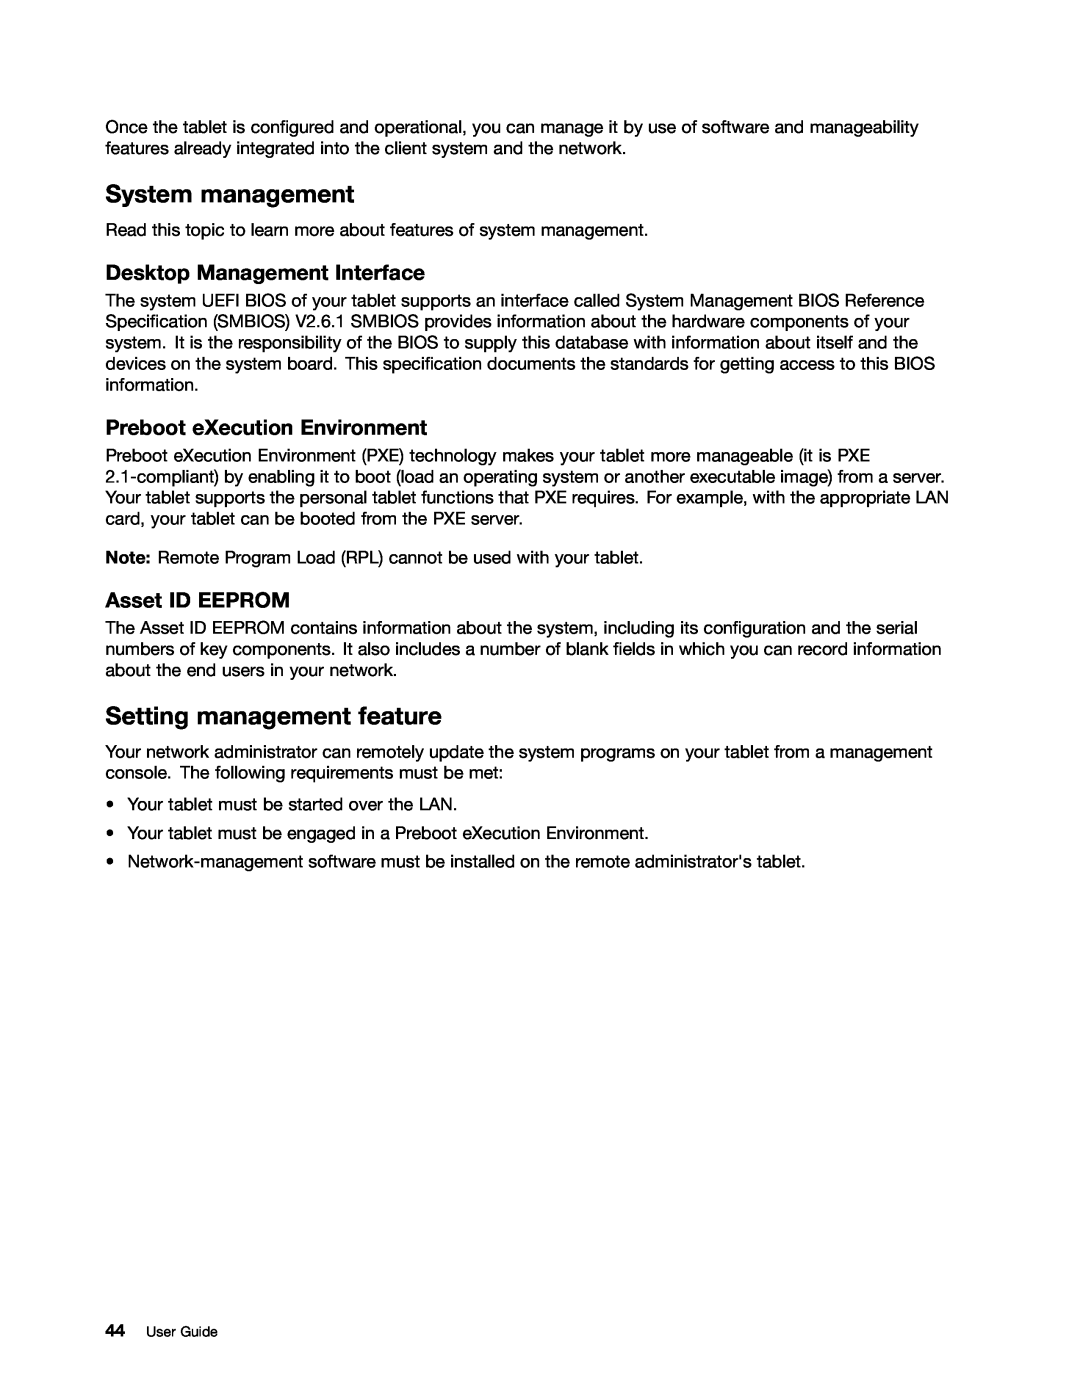 Lenovo 367922U System management, Setting management feature, Desktop Management Interface, Preboot eXecution Environment 